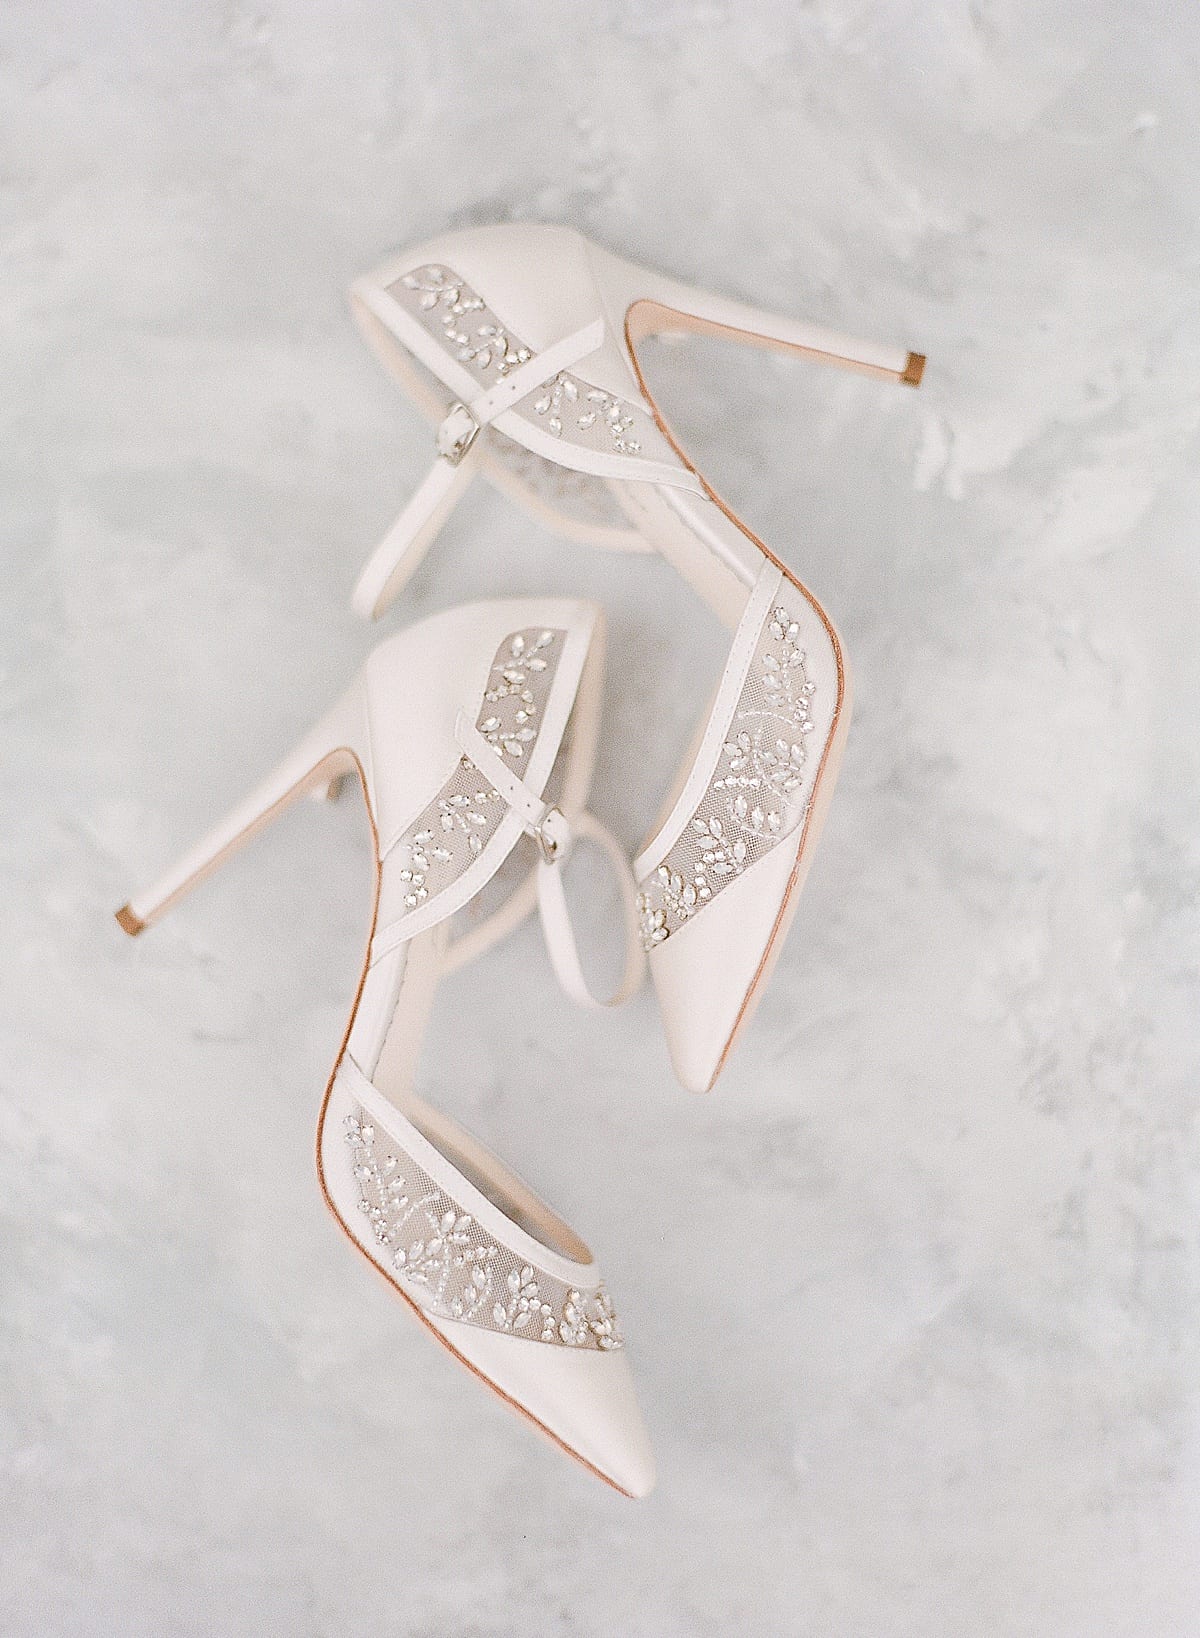 Five Comfortable Wedding Shoe Ideas - Chicago Wedding Blog